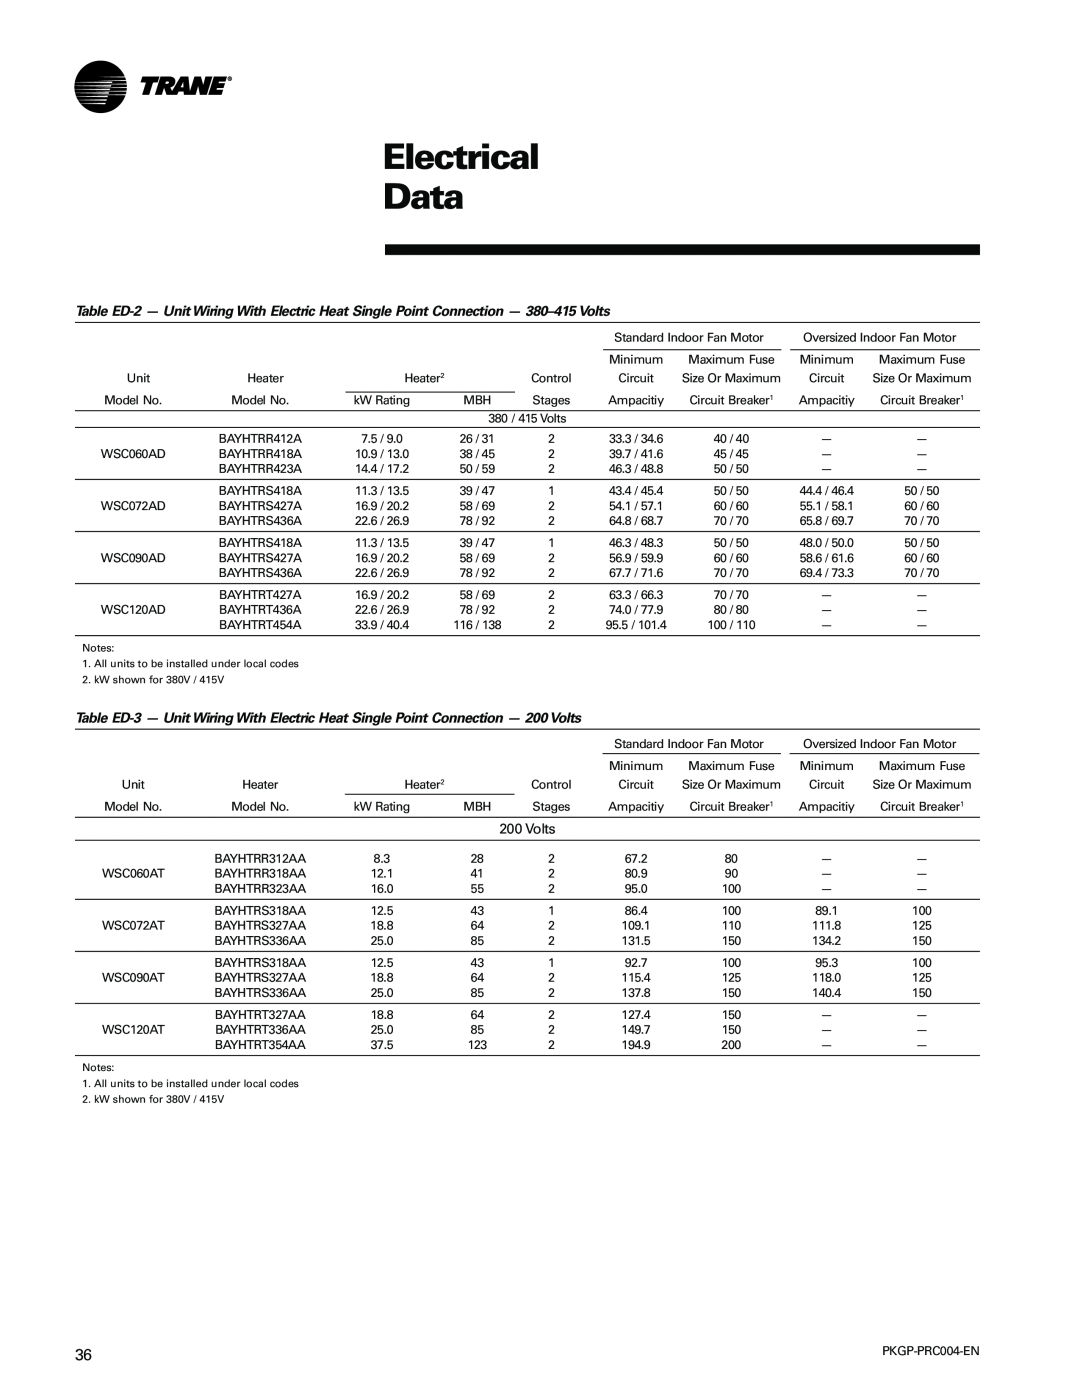 Trane WSC060-120 manual Electrical Data, Volts 